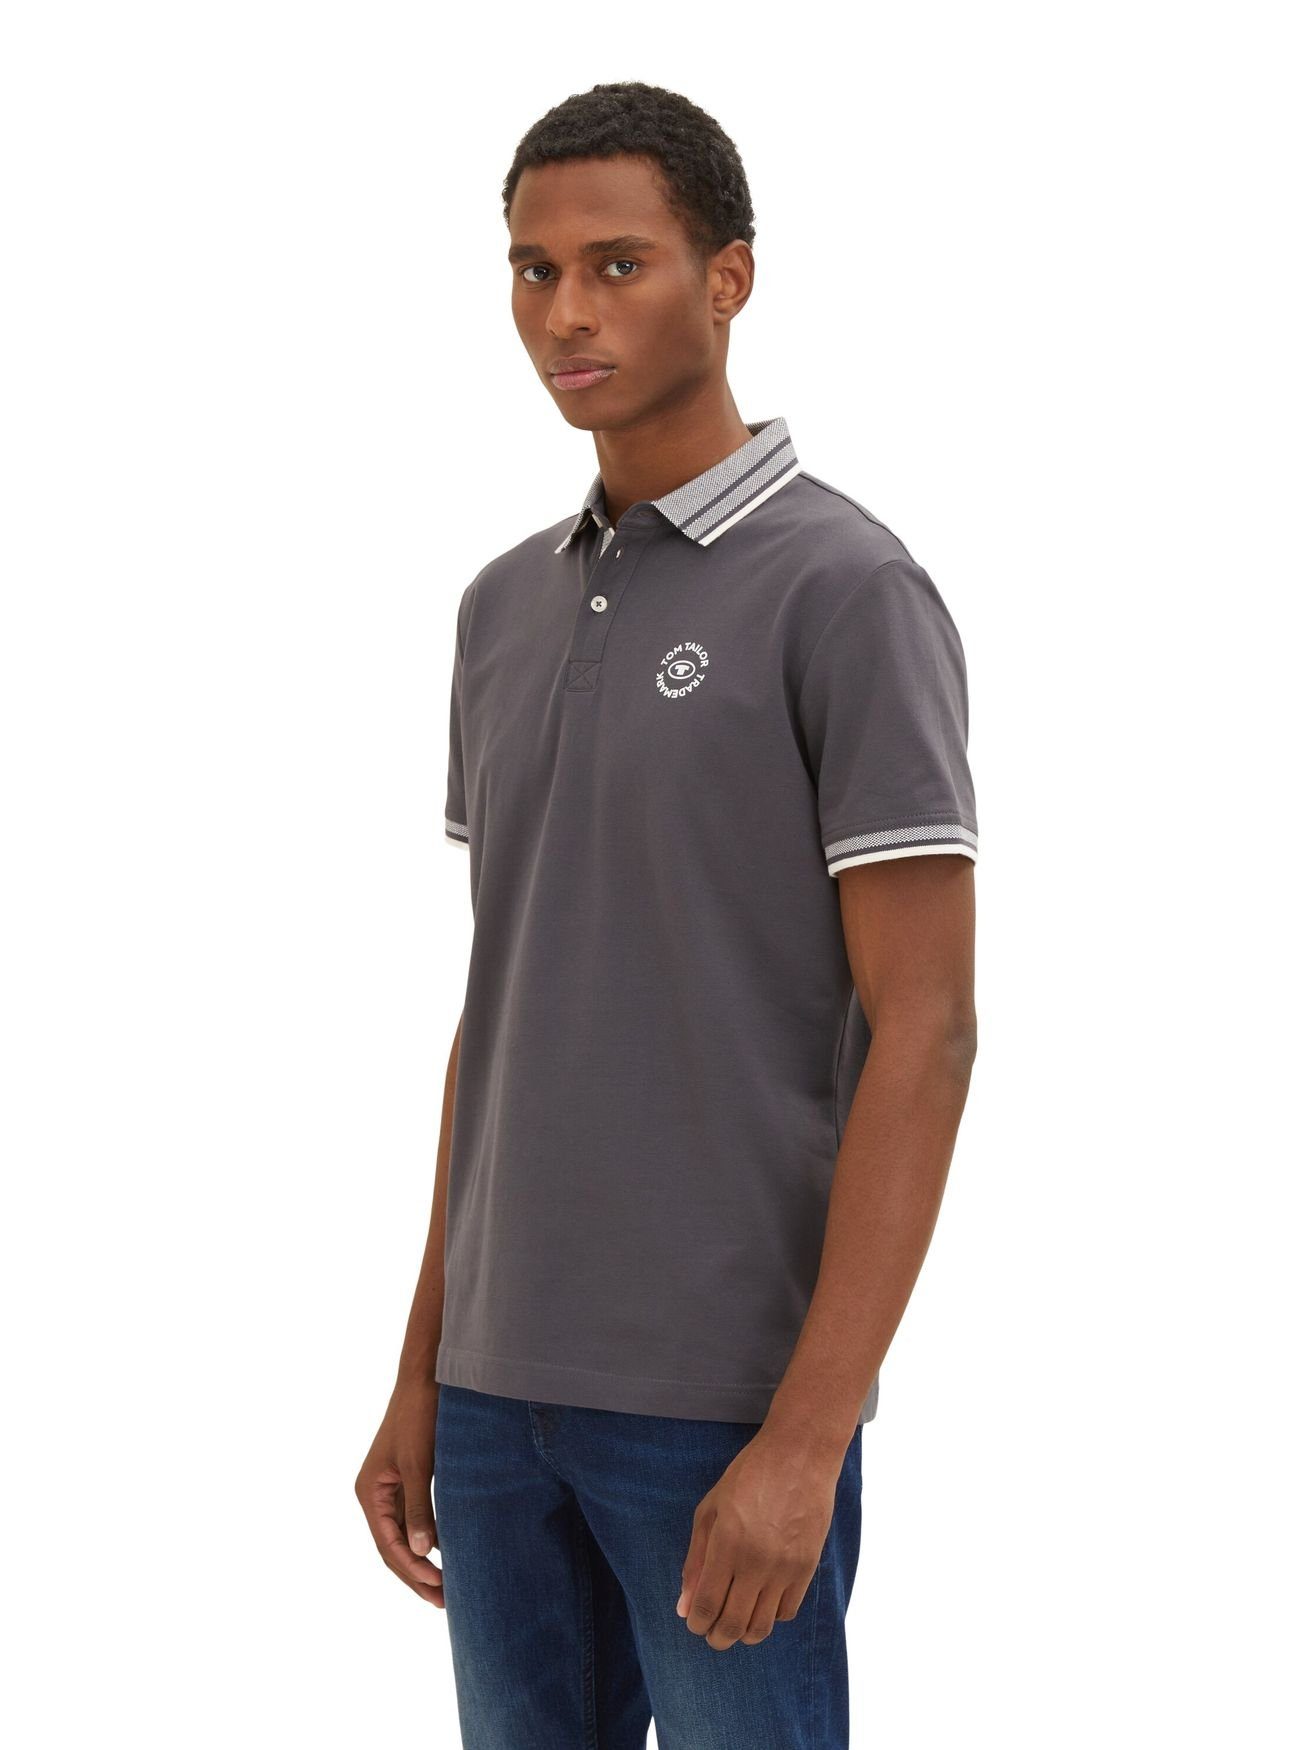 TOM 5312 BASIC Shirt Dunkelgrau mit Poloshirt POLO TAILOR Polo Logoprägung in